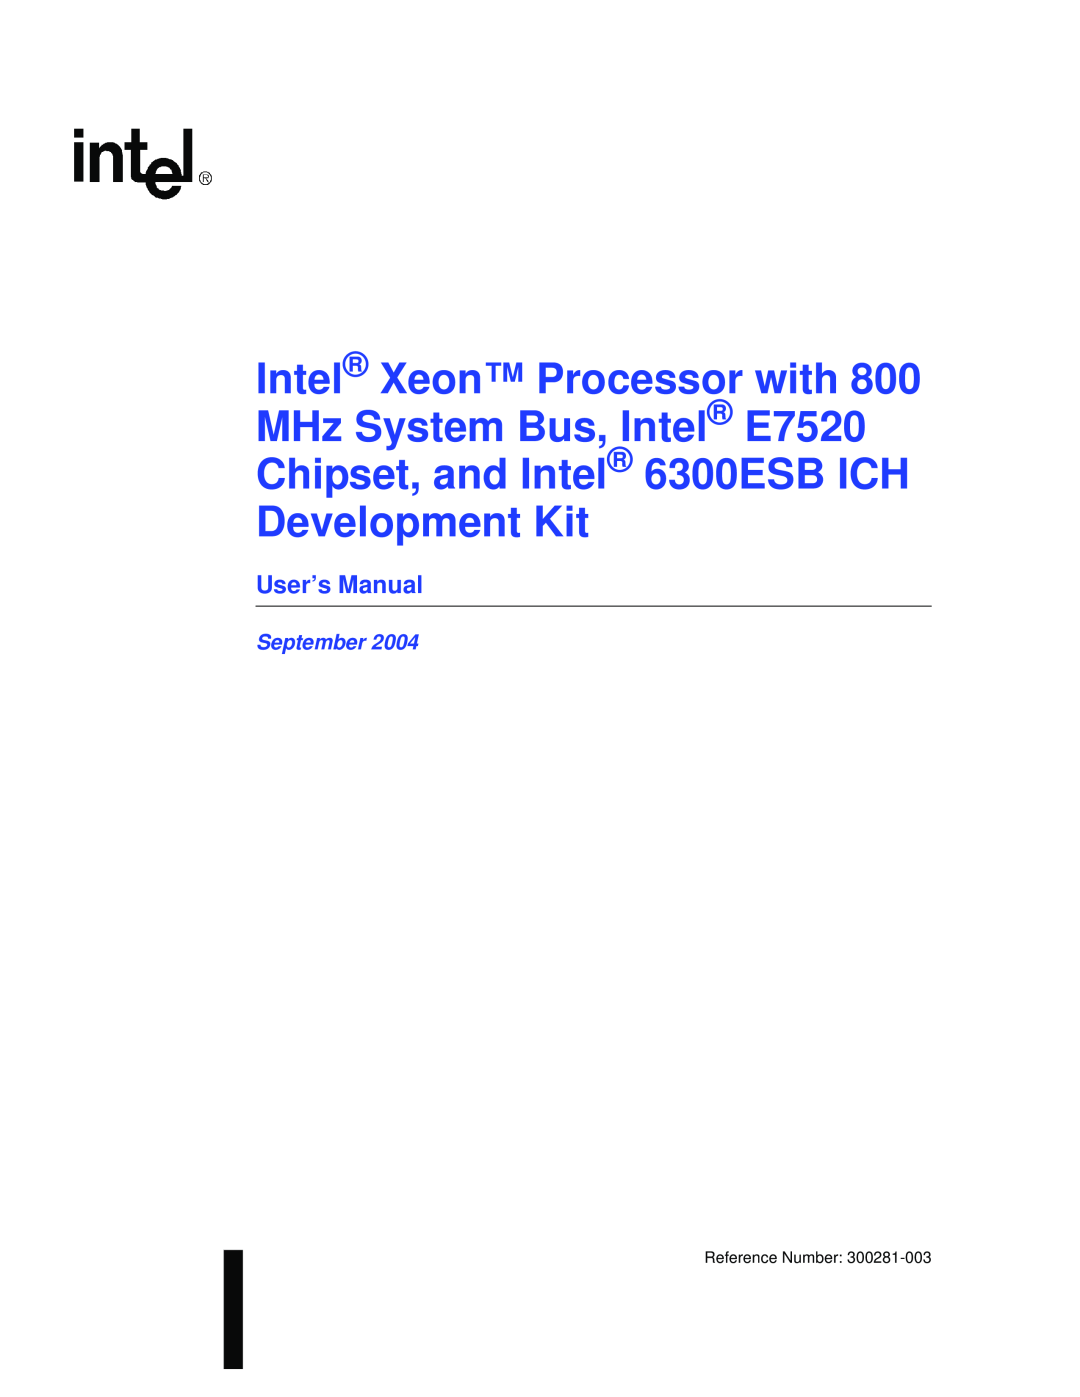 Intel 6300ESB ICH, Xeon user manual User’s Manual, September 